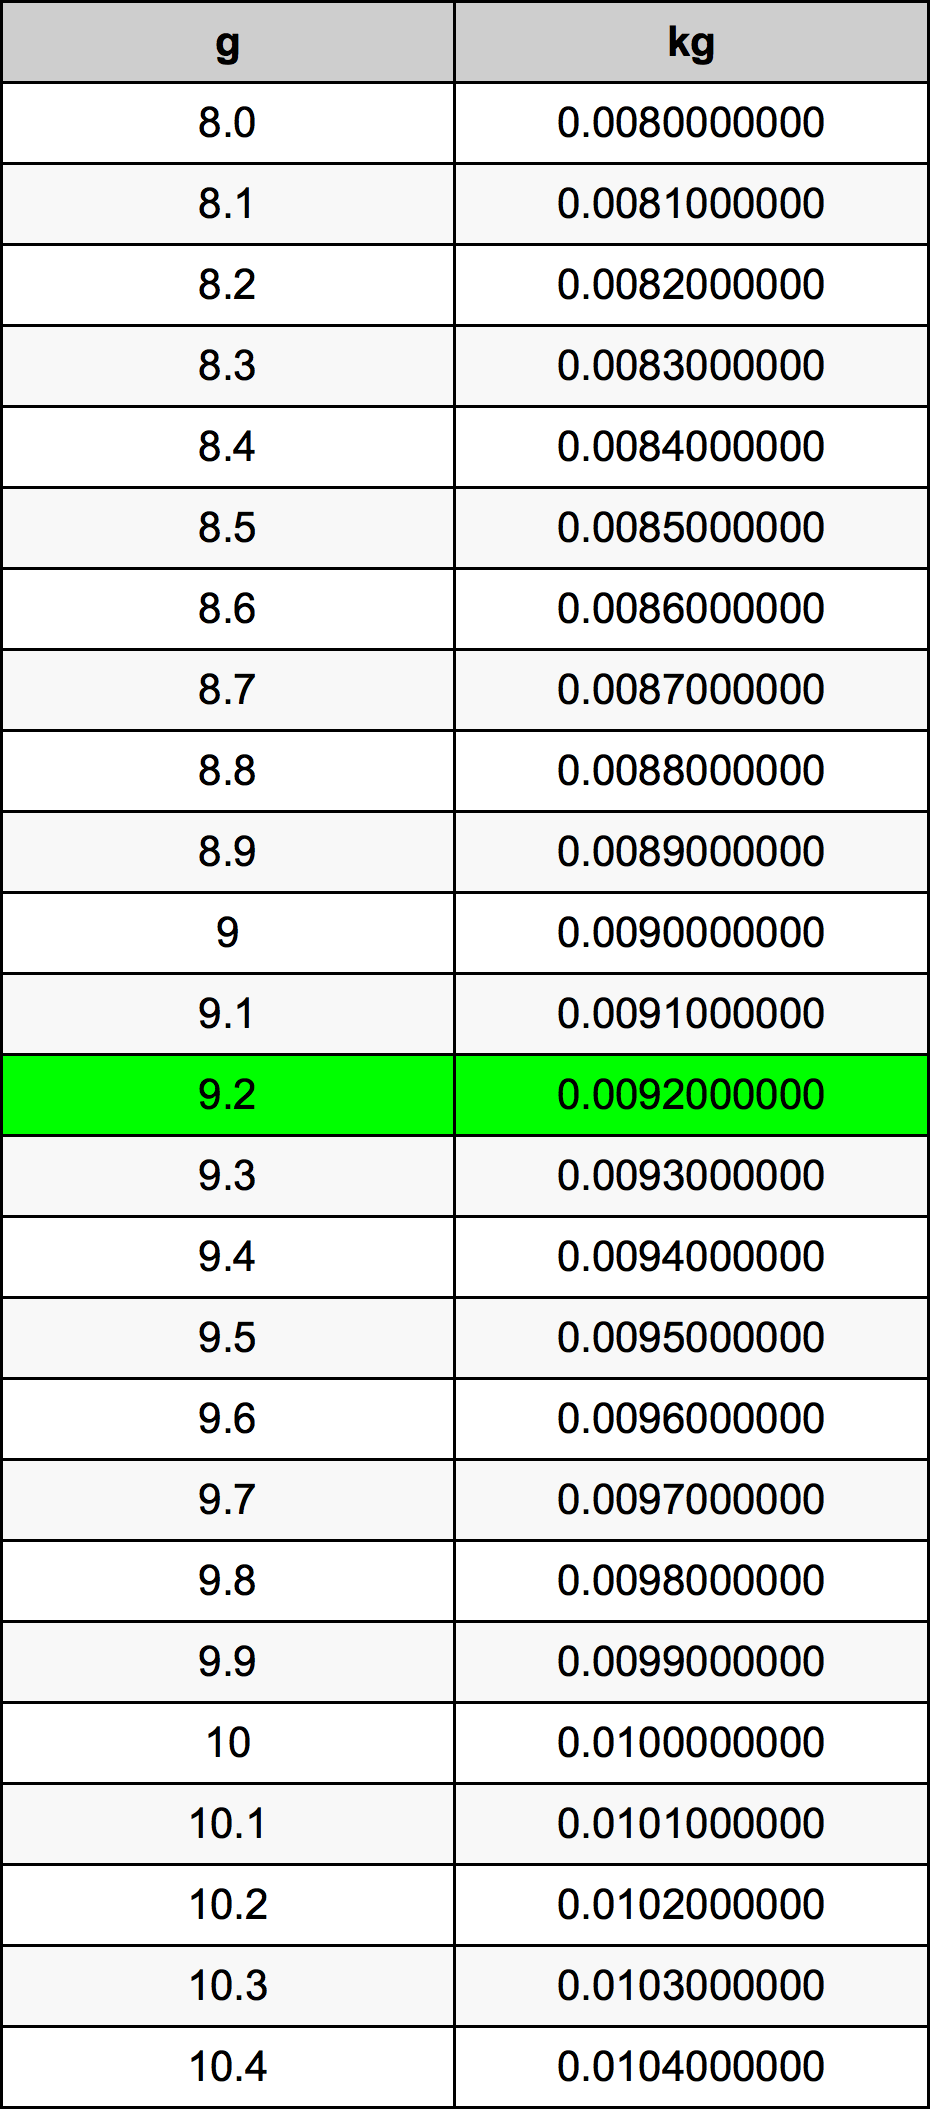 9.2 غرام جدول تحويل